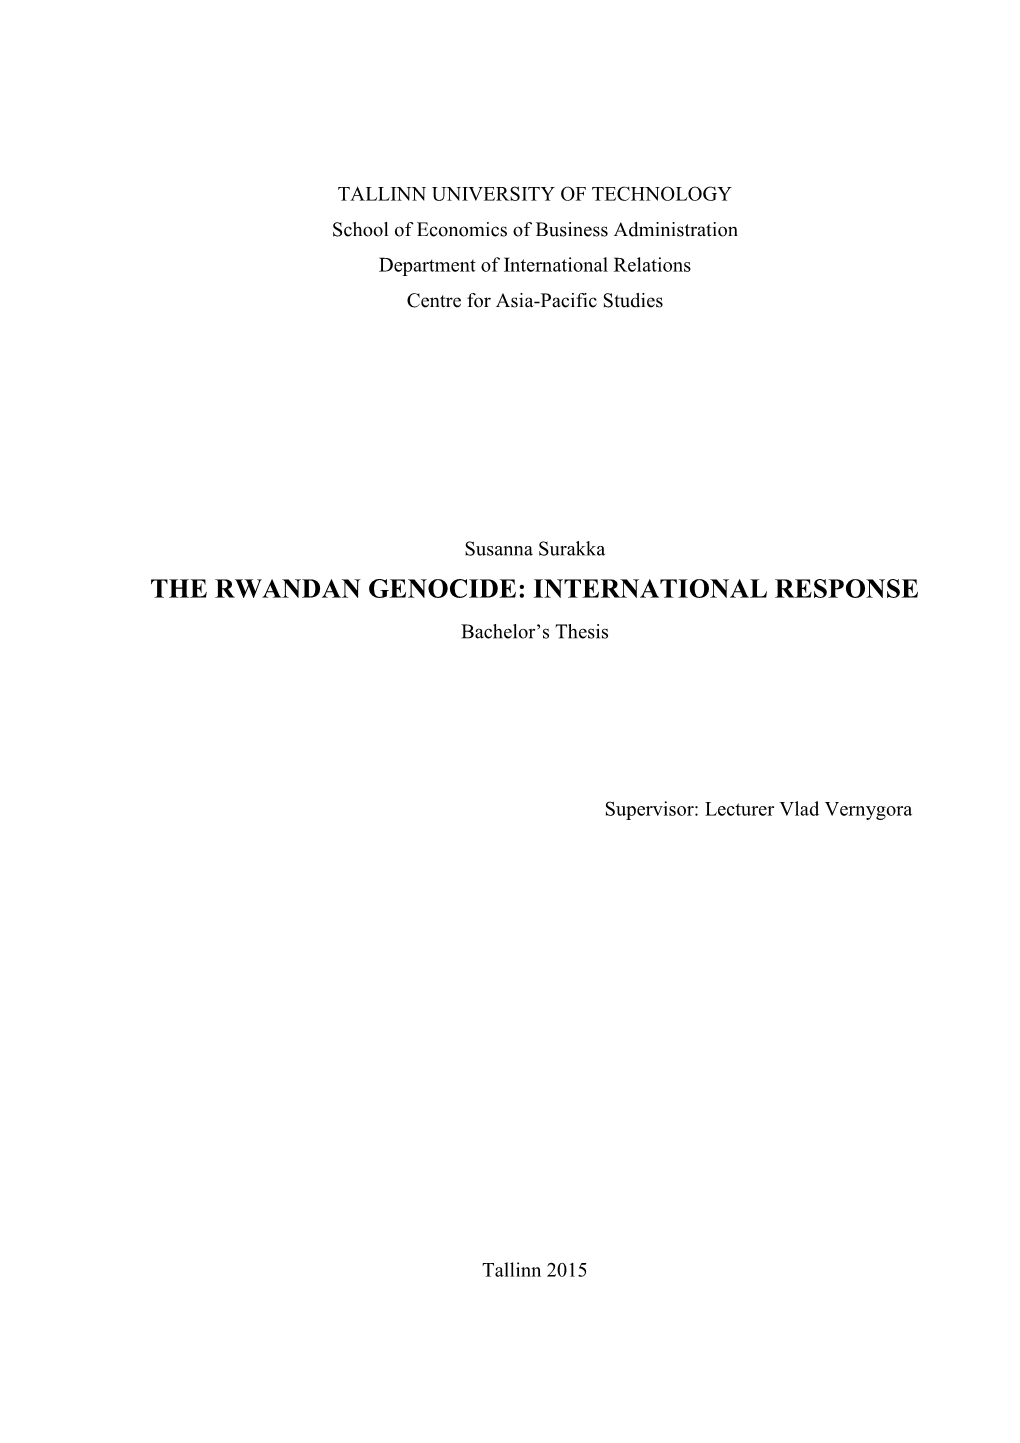 THE RWANDAN GENOCIDE: INTERNATIONAL RESPONSE Bachelor’S Thesis